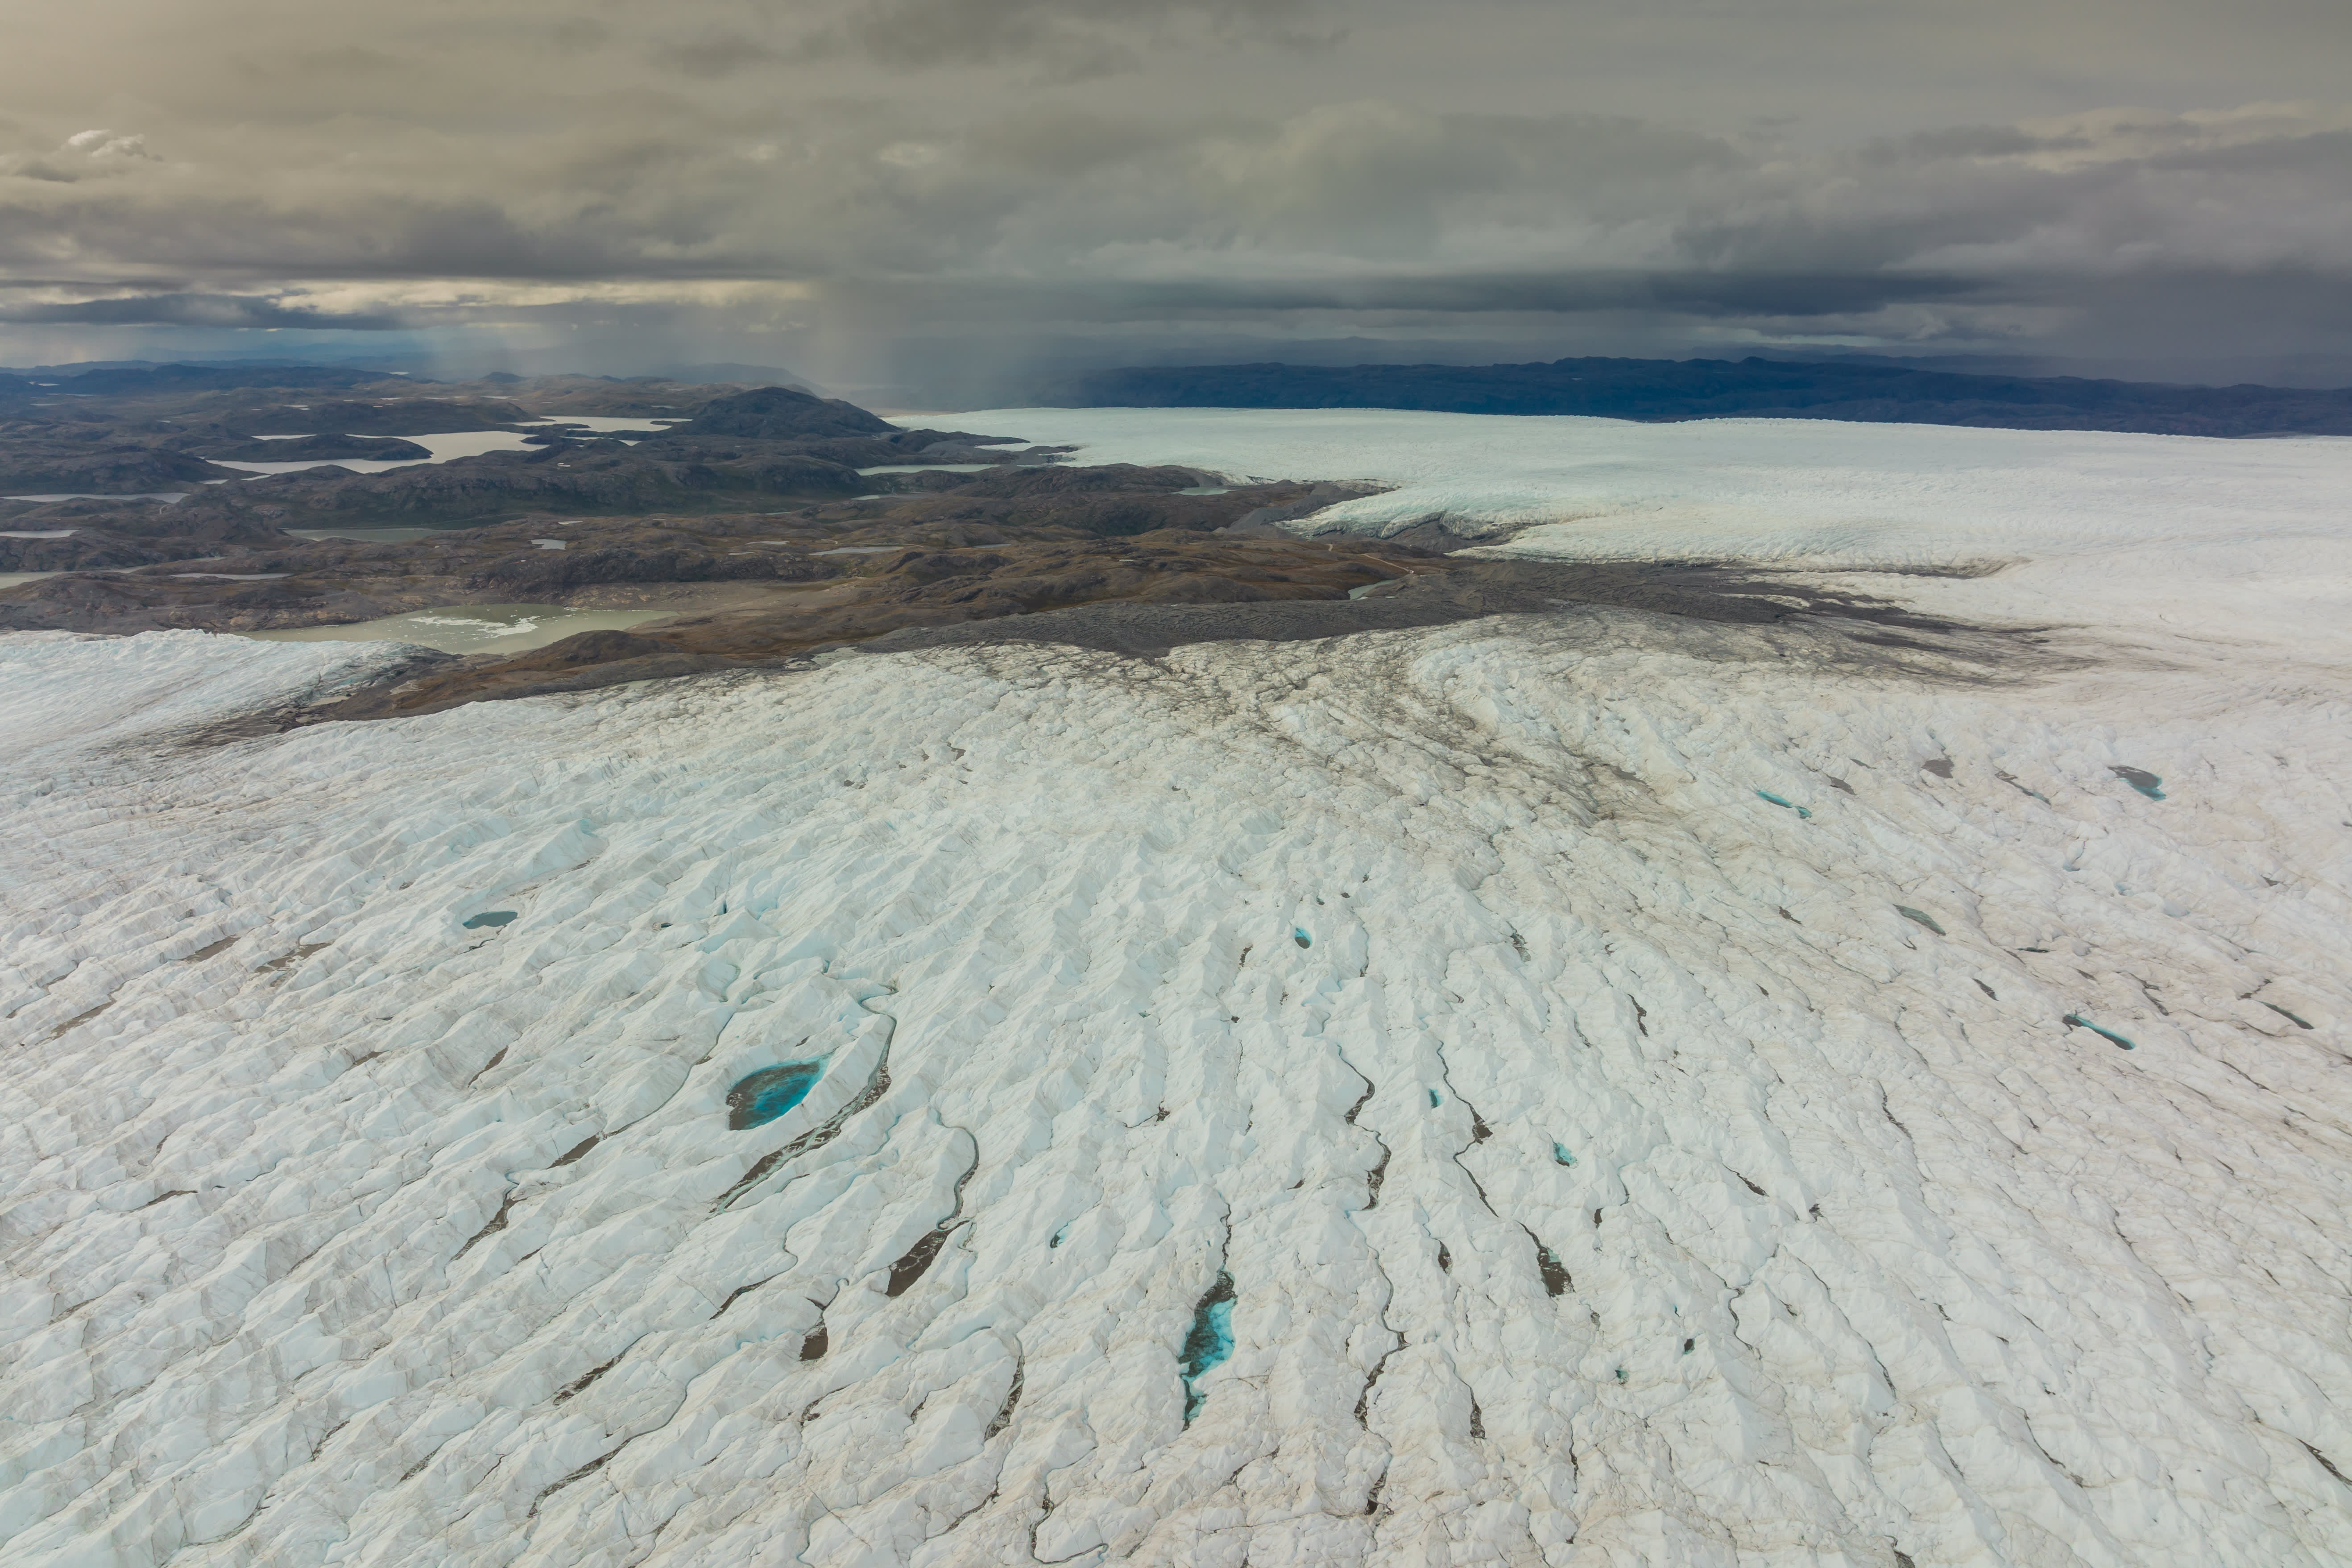 Kita sudah setengah jalan menuju titik kritis pencairan Lapisan Es Greenland